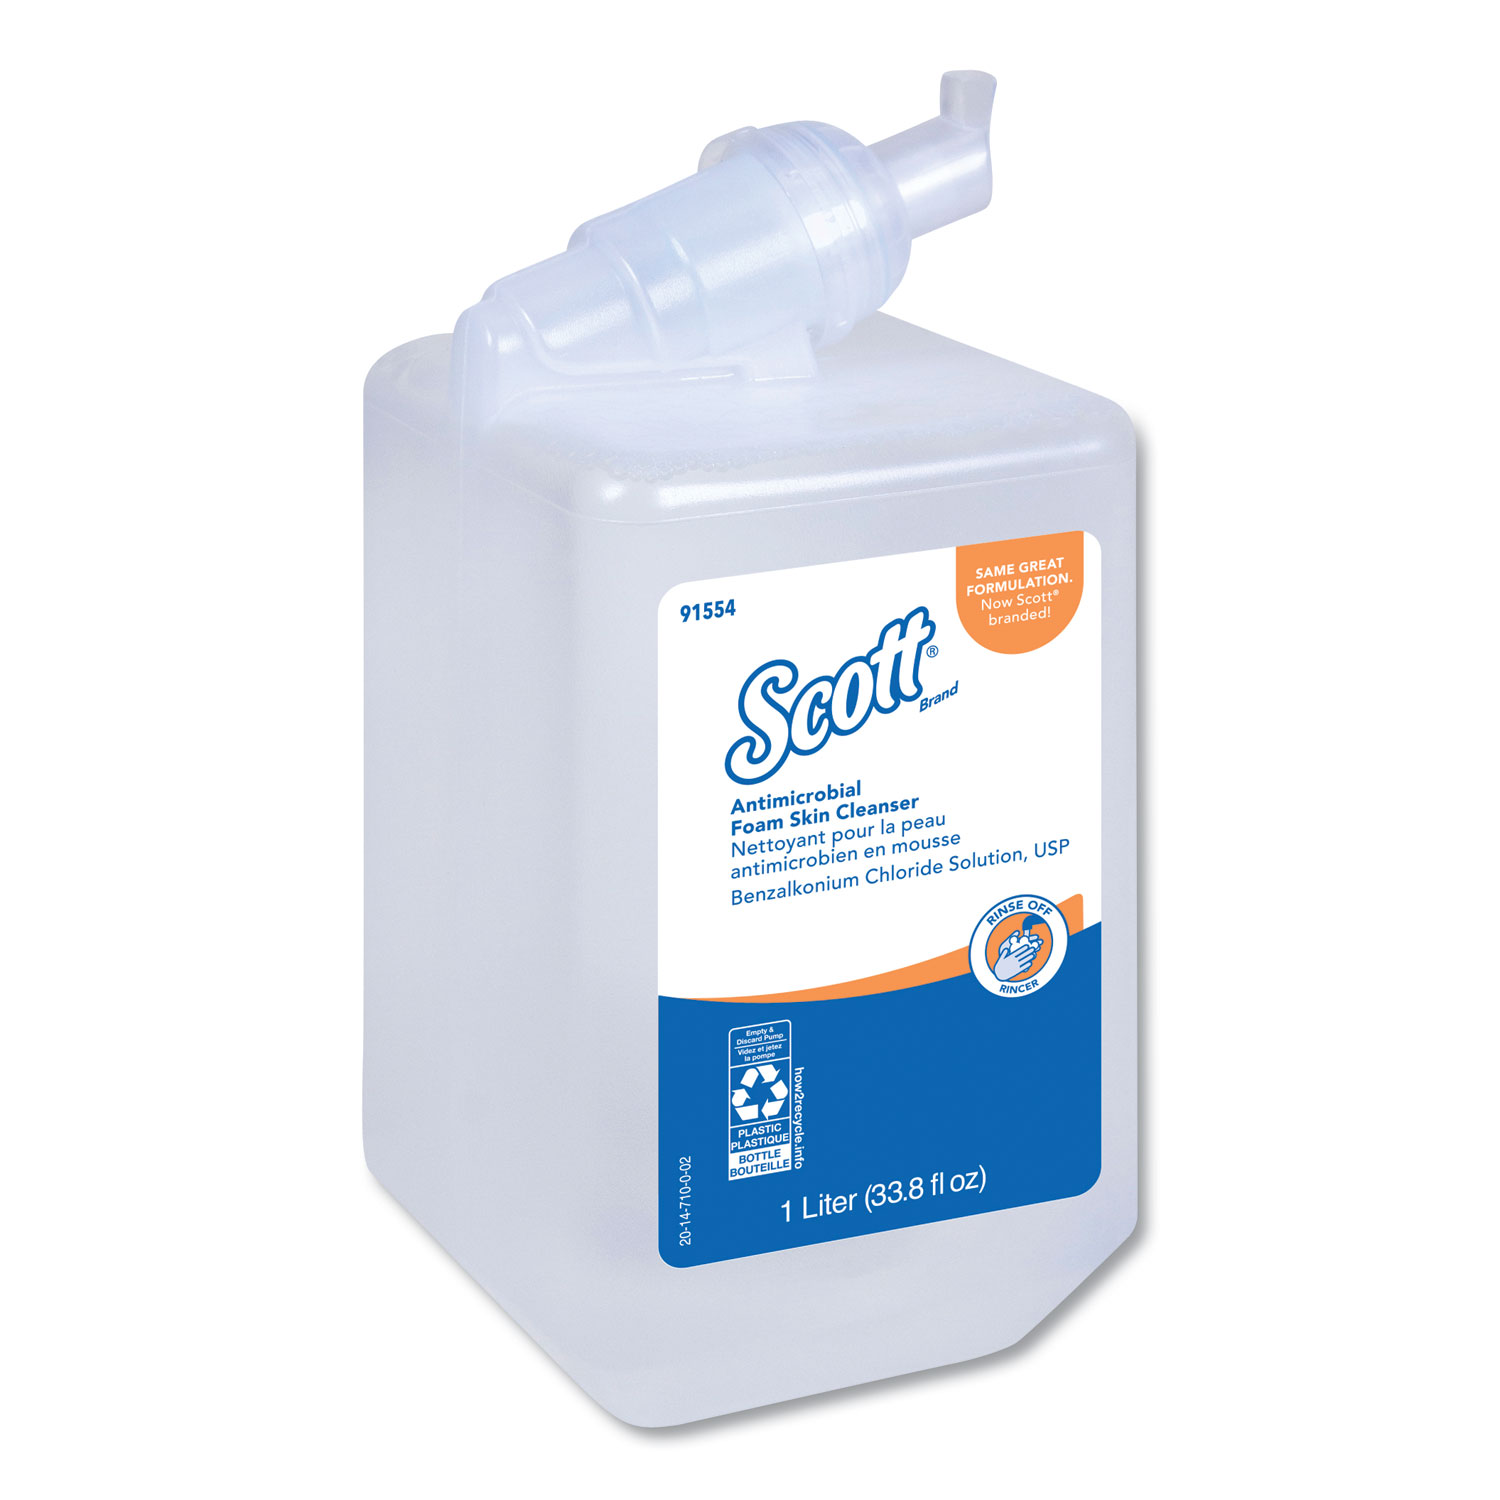  Scott 91554 Control Antimicrobial Foam Skin Cleanser, Fresh Scent, 1000 mL Bottle (KCC91554) 